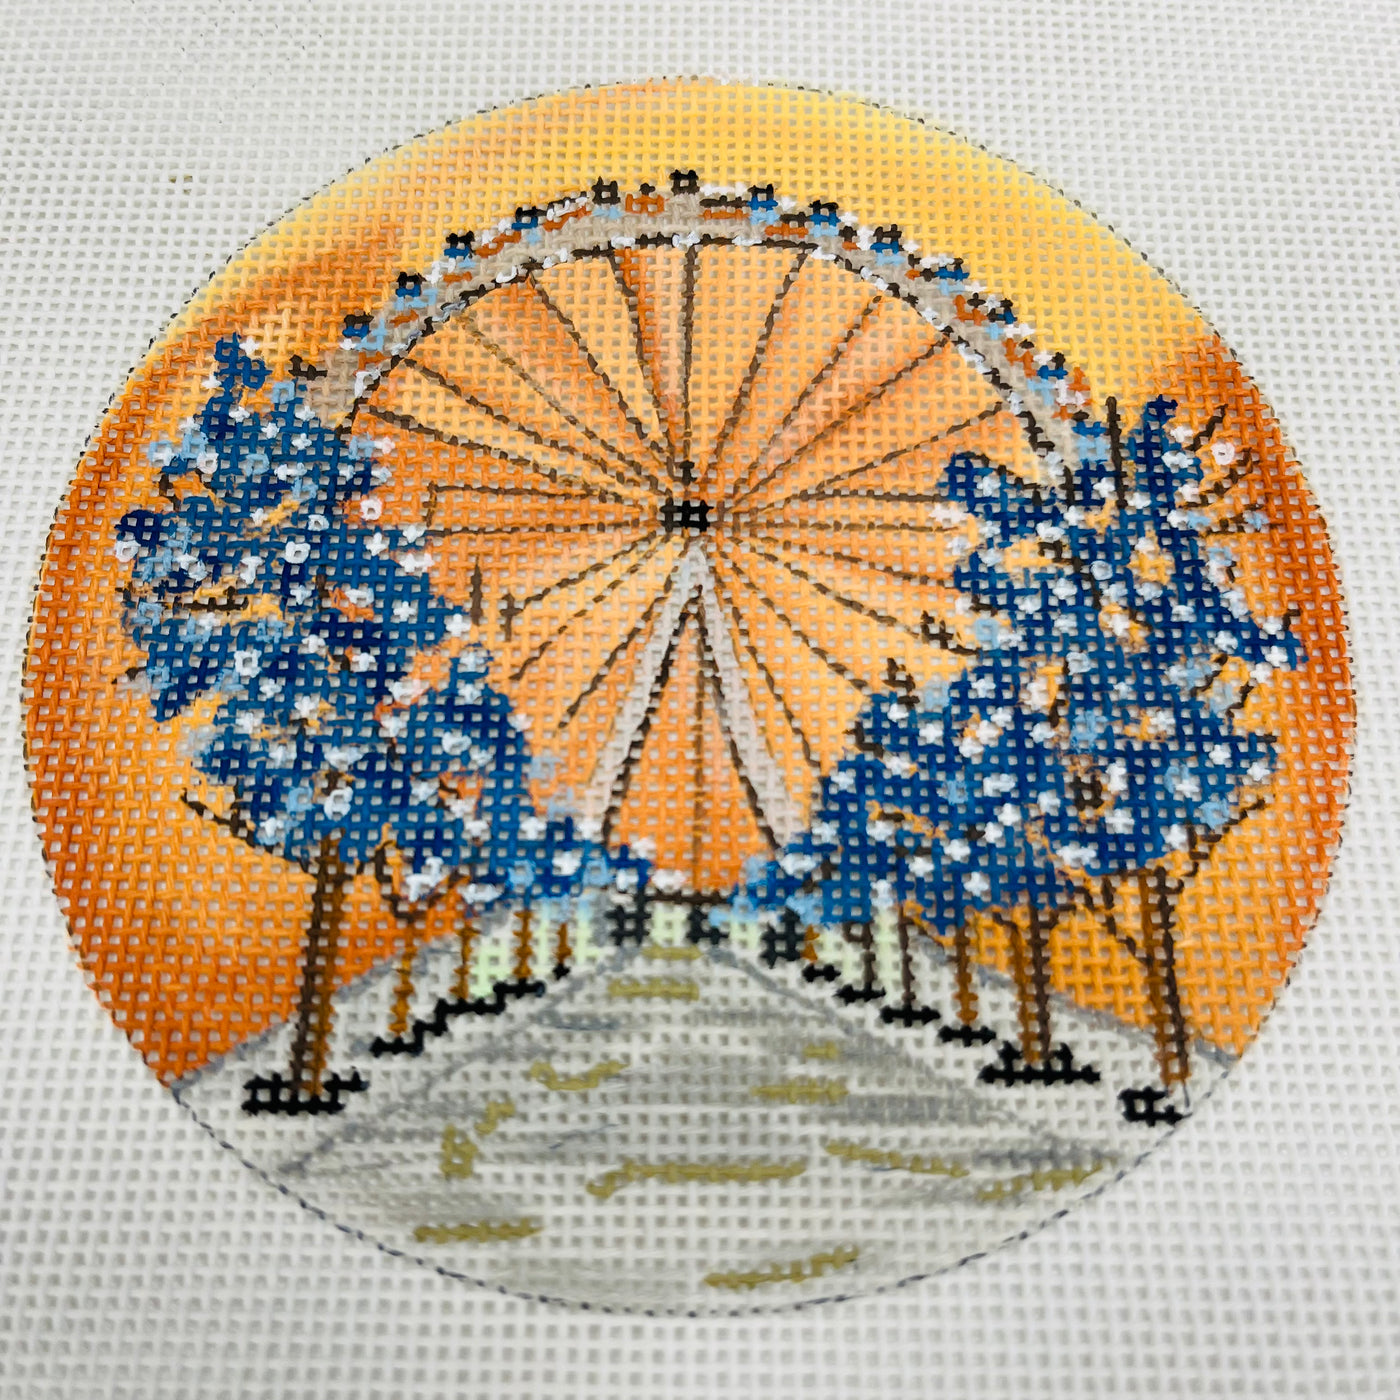 London Eye - Stitch Concept Ornament Needlepoint Canvas